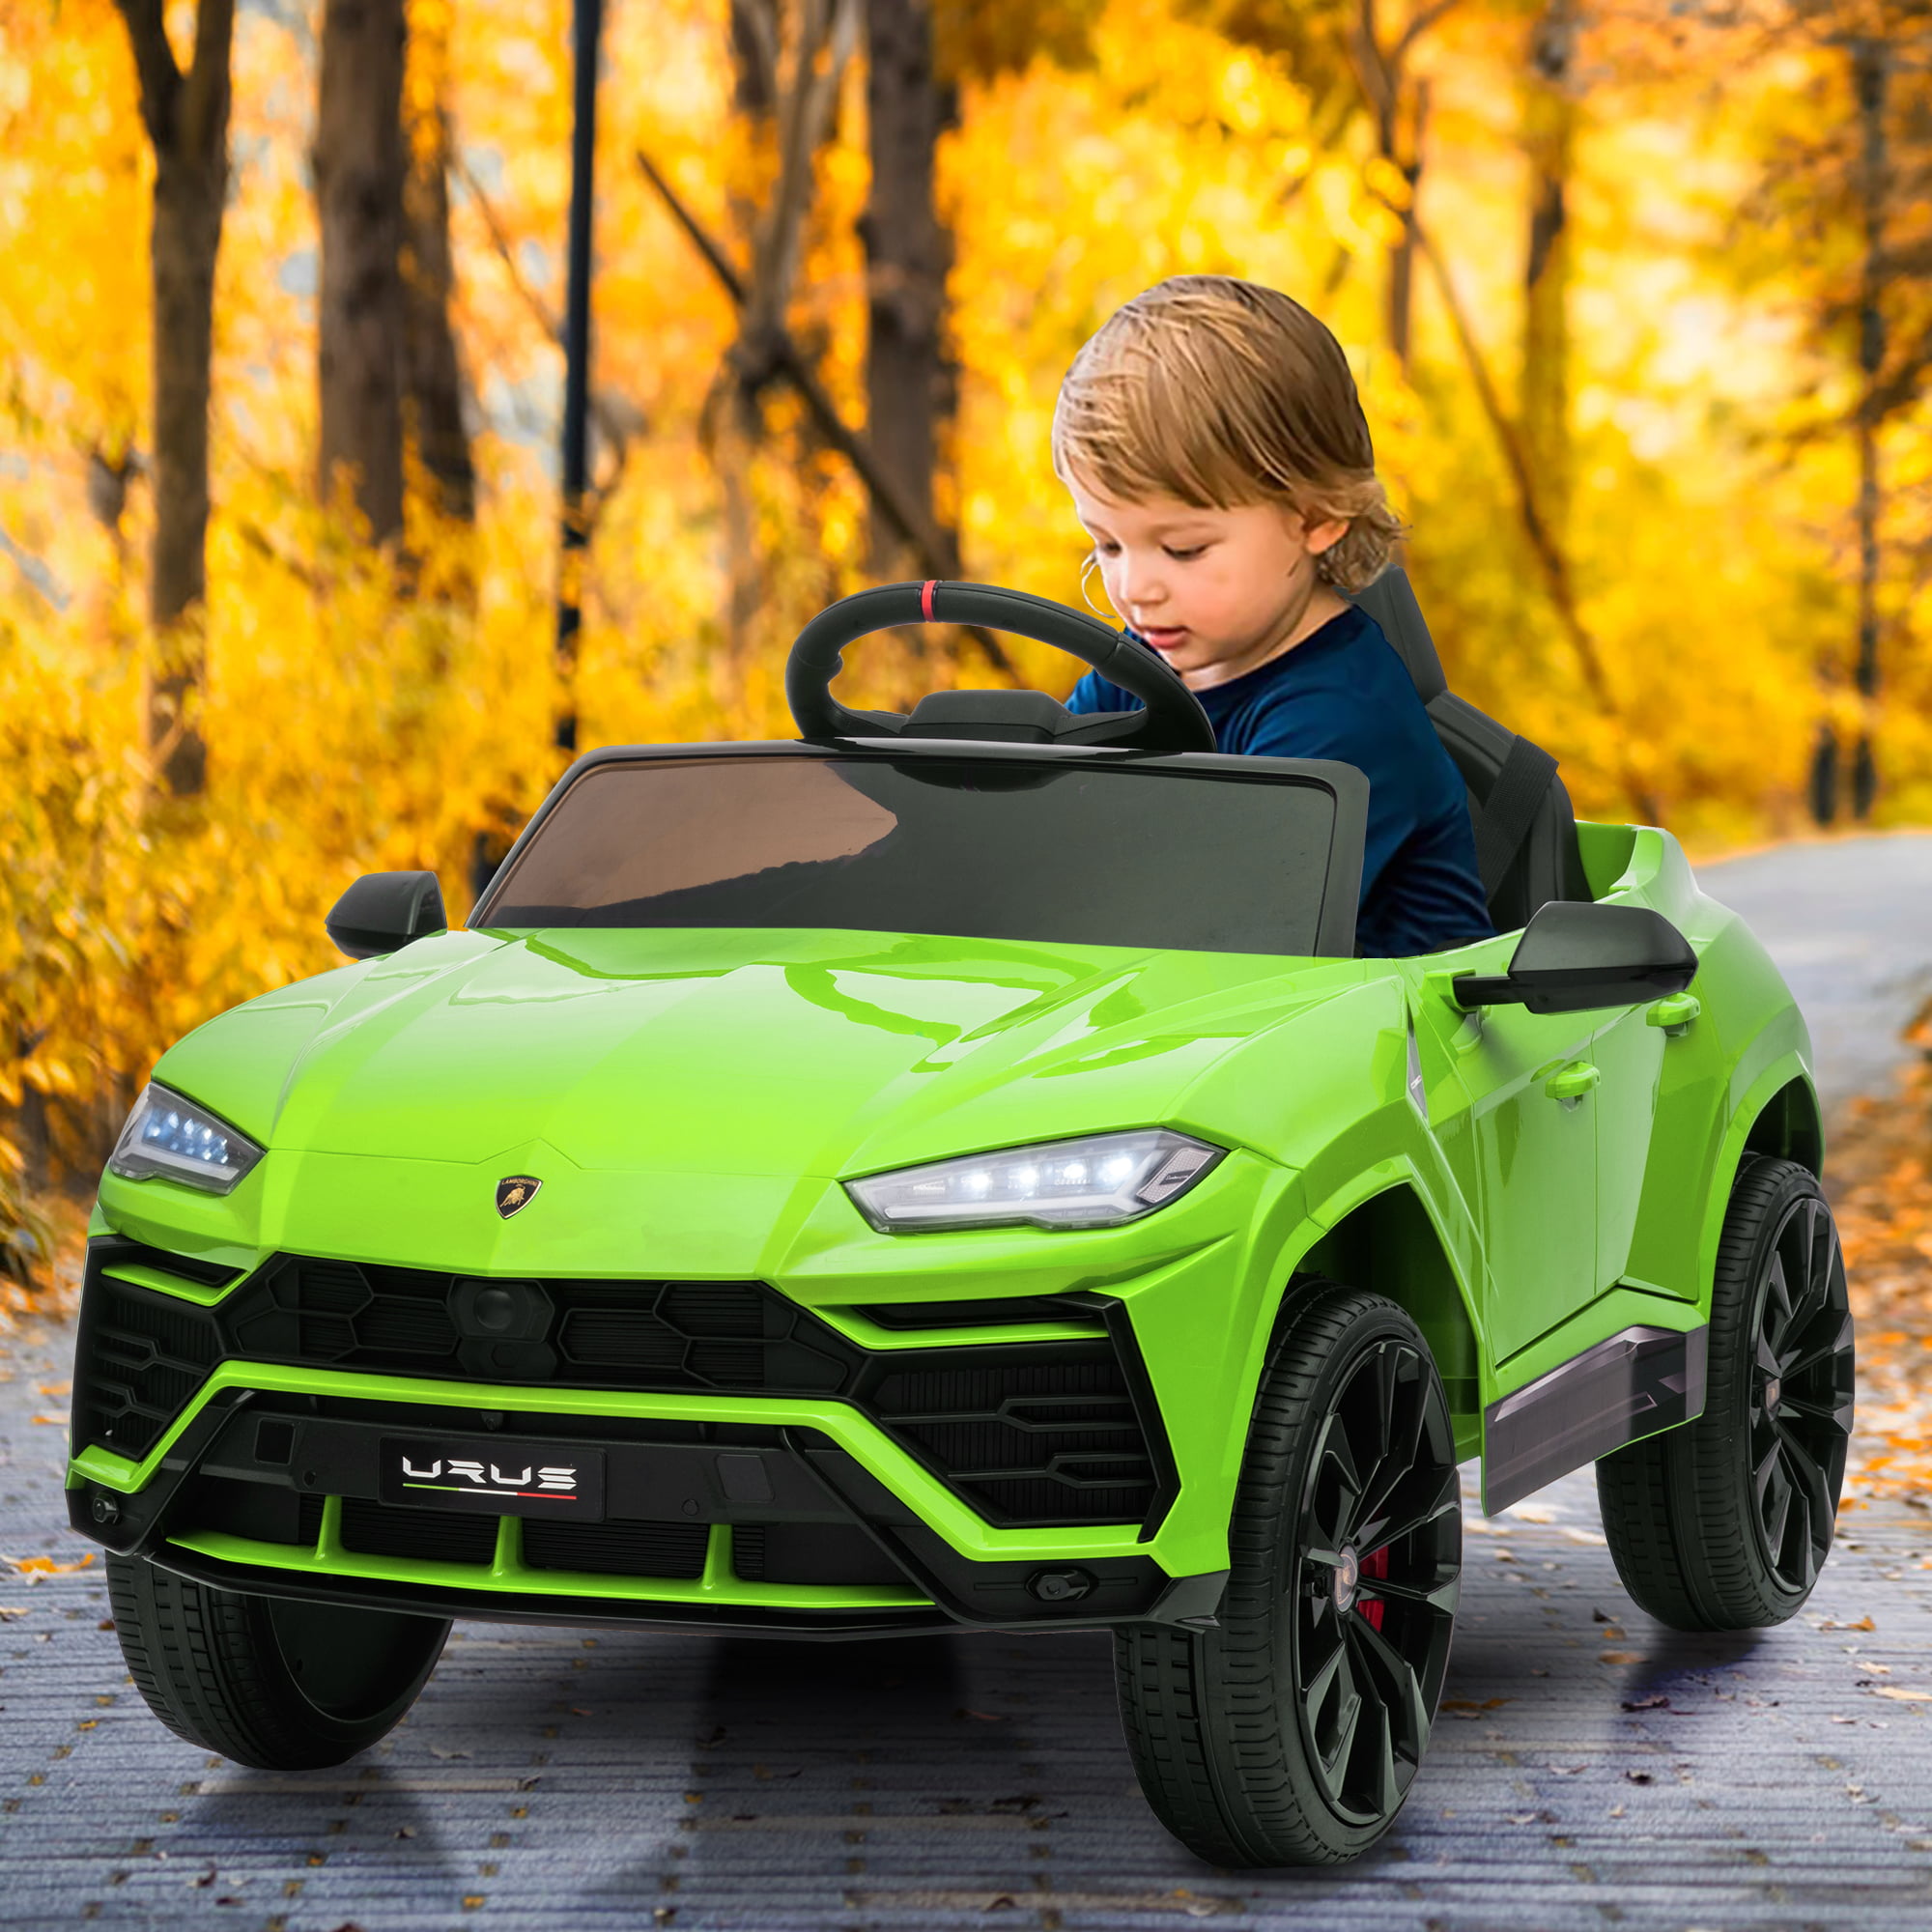 Details about   12V Ride On Car Toy Licensed Lamborghini Wheels Suspension LED Lights Green 